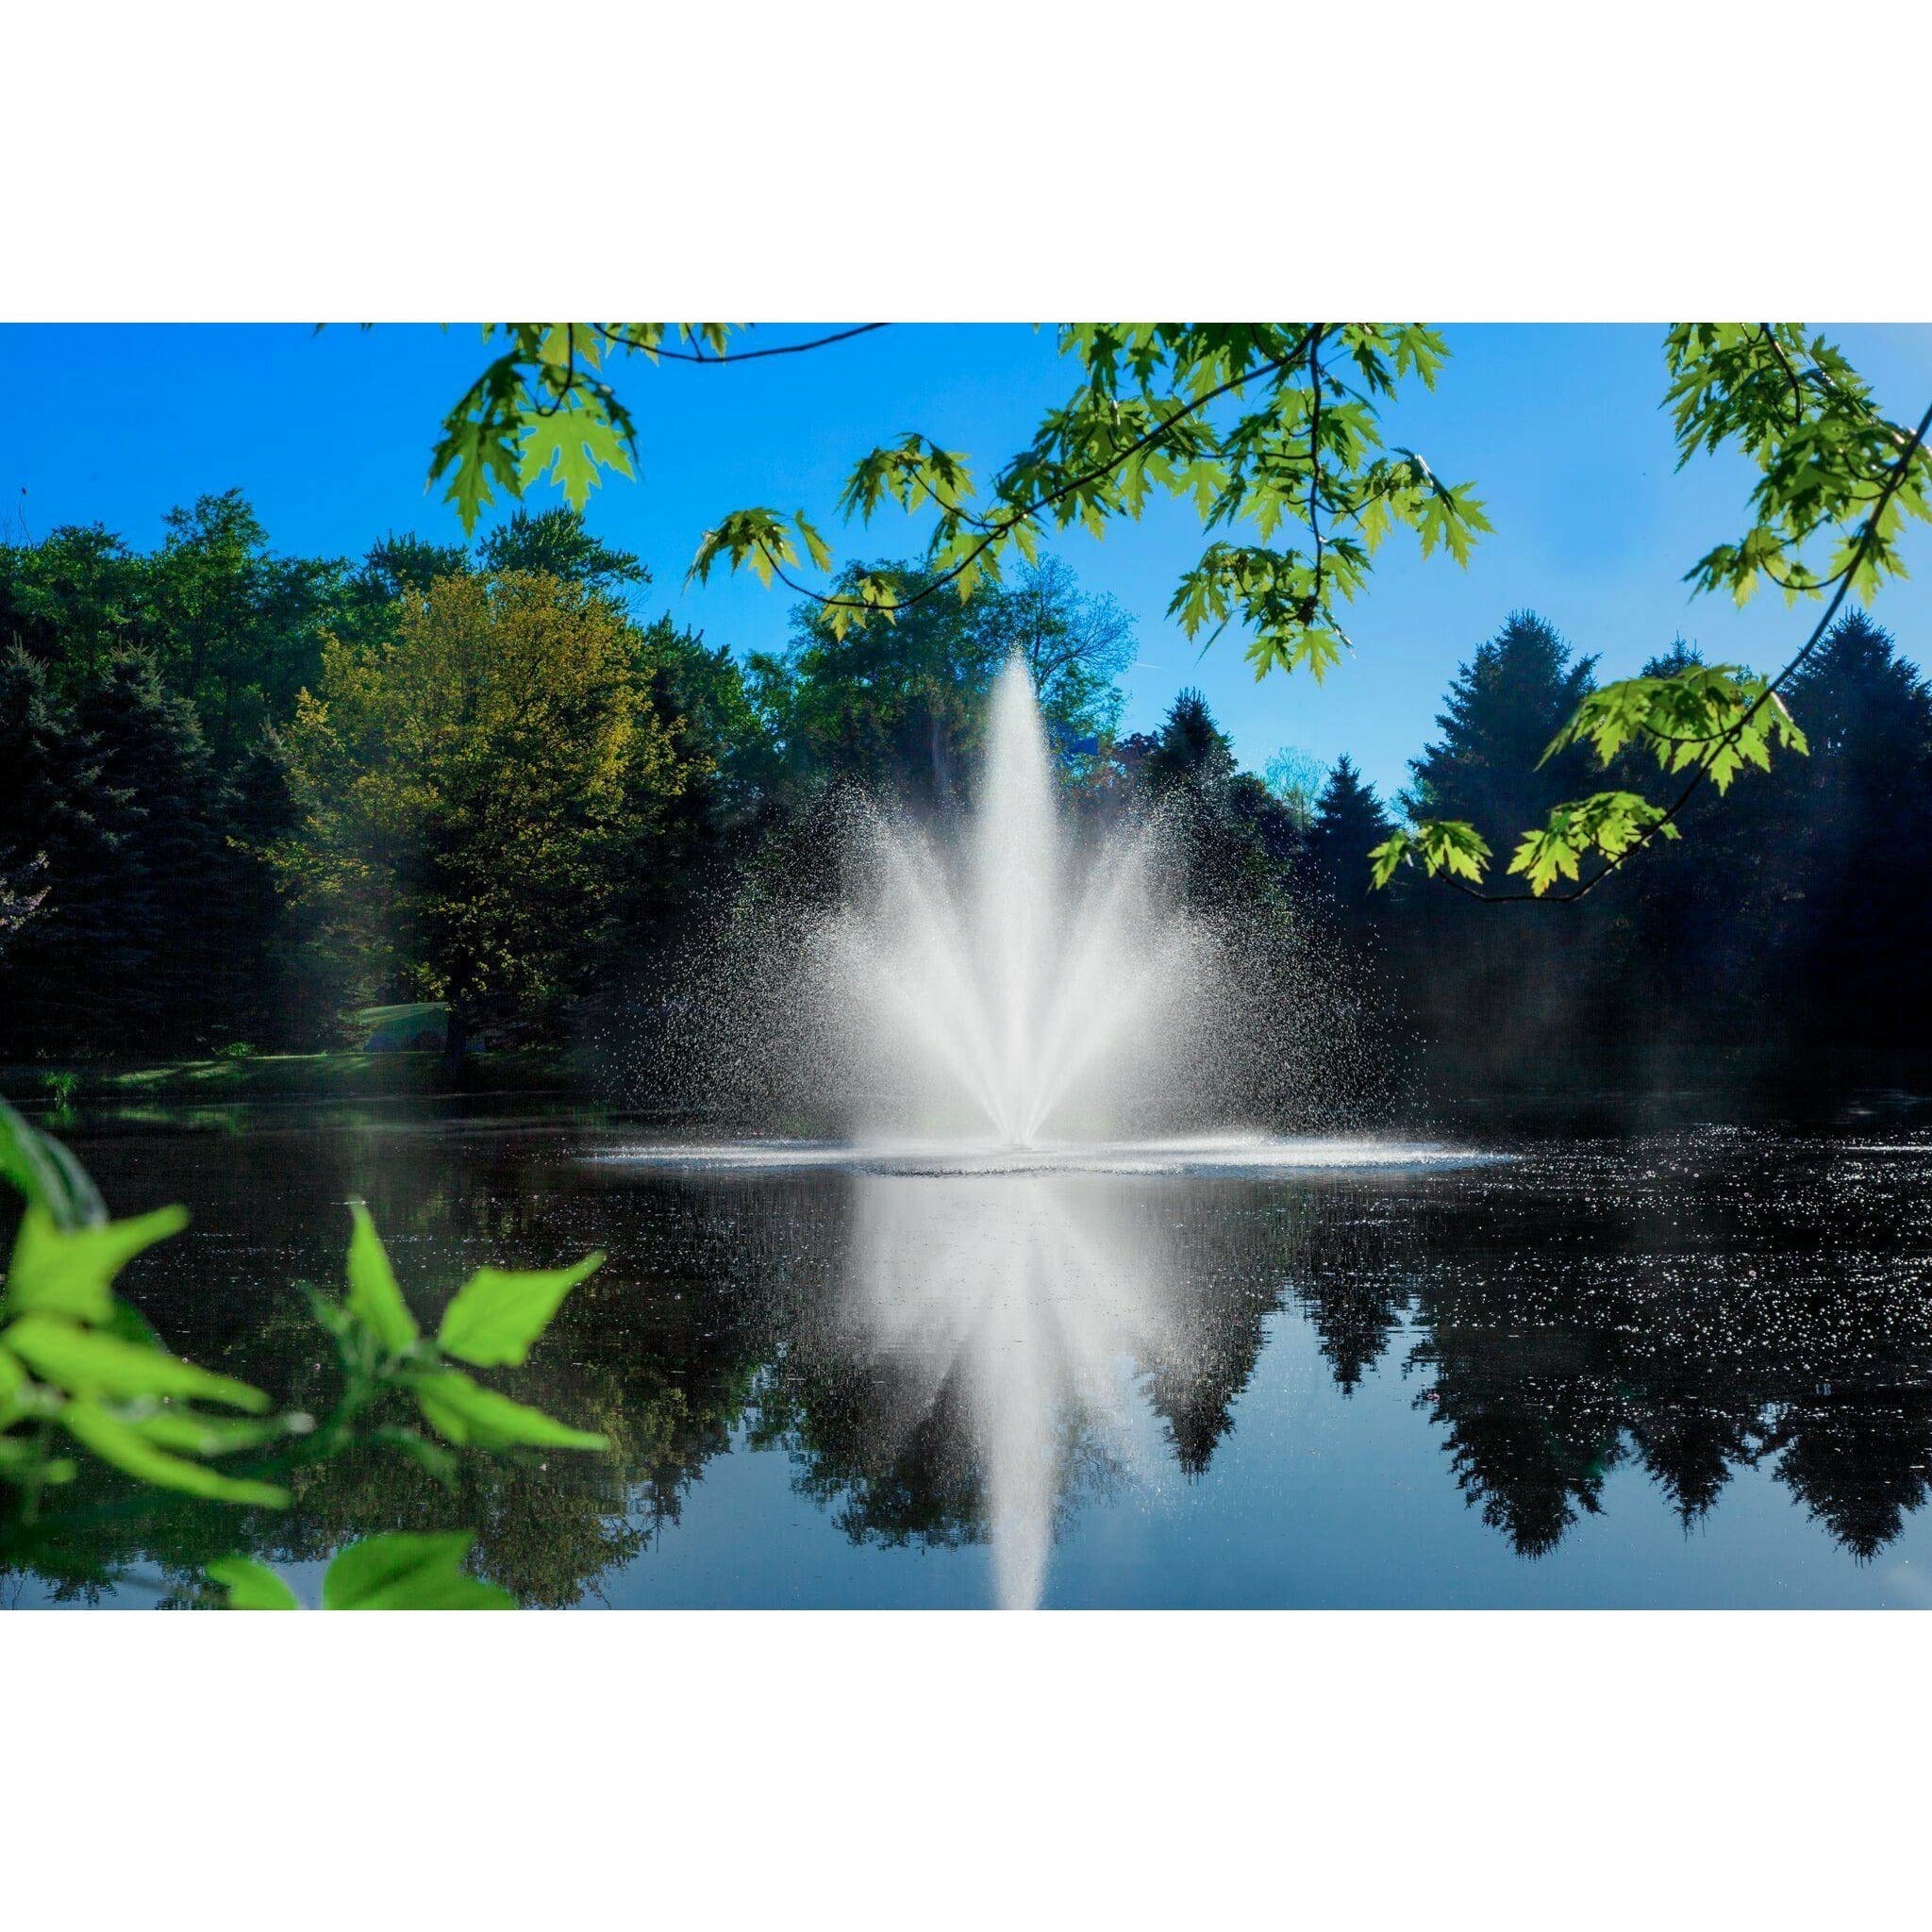 Scott Aerator Triad Fountain - American Pond Supplies Scott Aerator Pond Fountains Pond Fountains